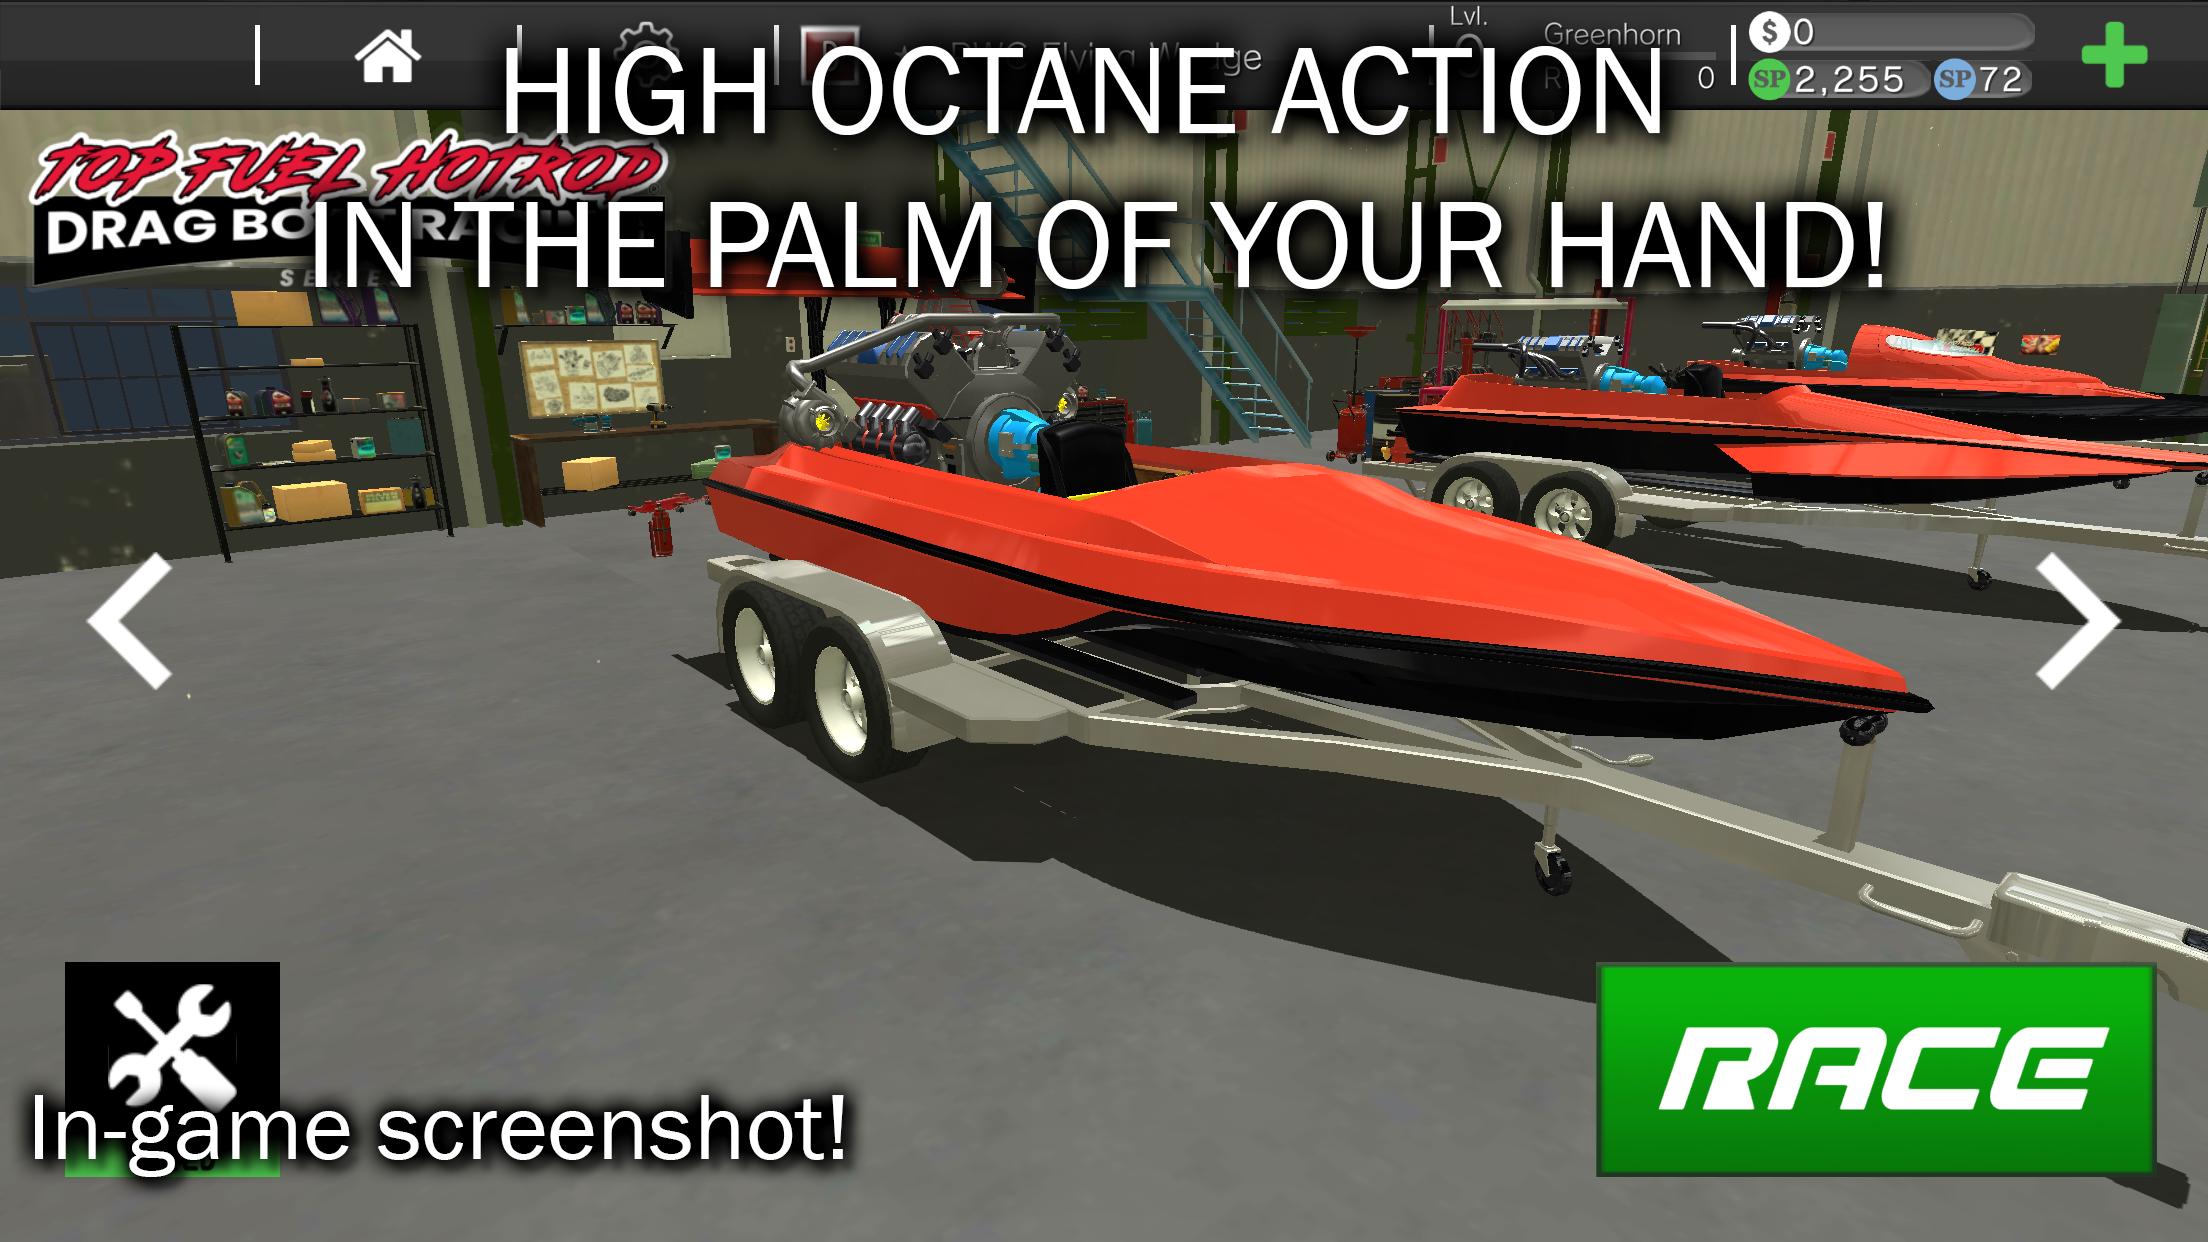 Top Fuel Hot Rod - Drag Boat Speed Racing Game 1.16 Screenshot 1